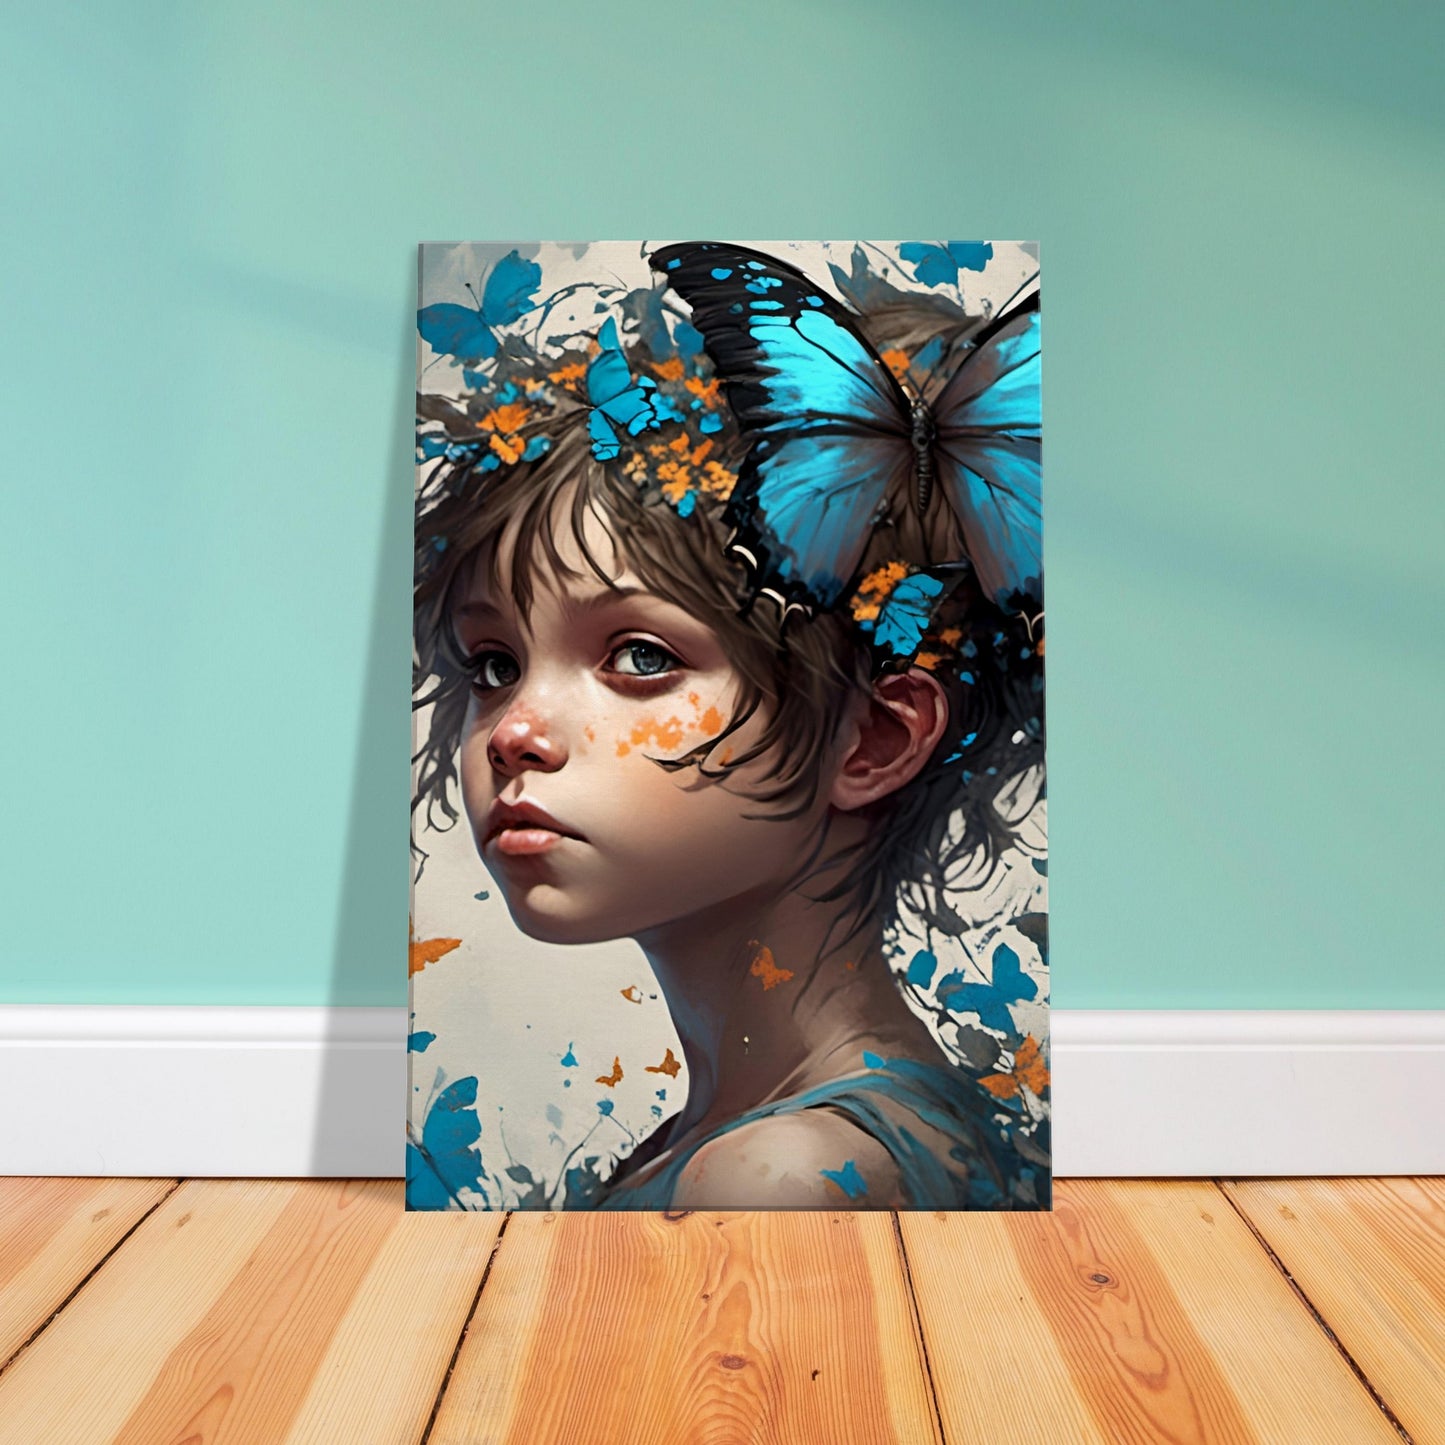 "Enchanted Dreams: Sweet Boy Amidst Fantasy Butterflies" 2D digital Art Canvas Art